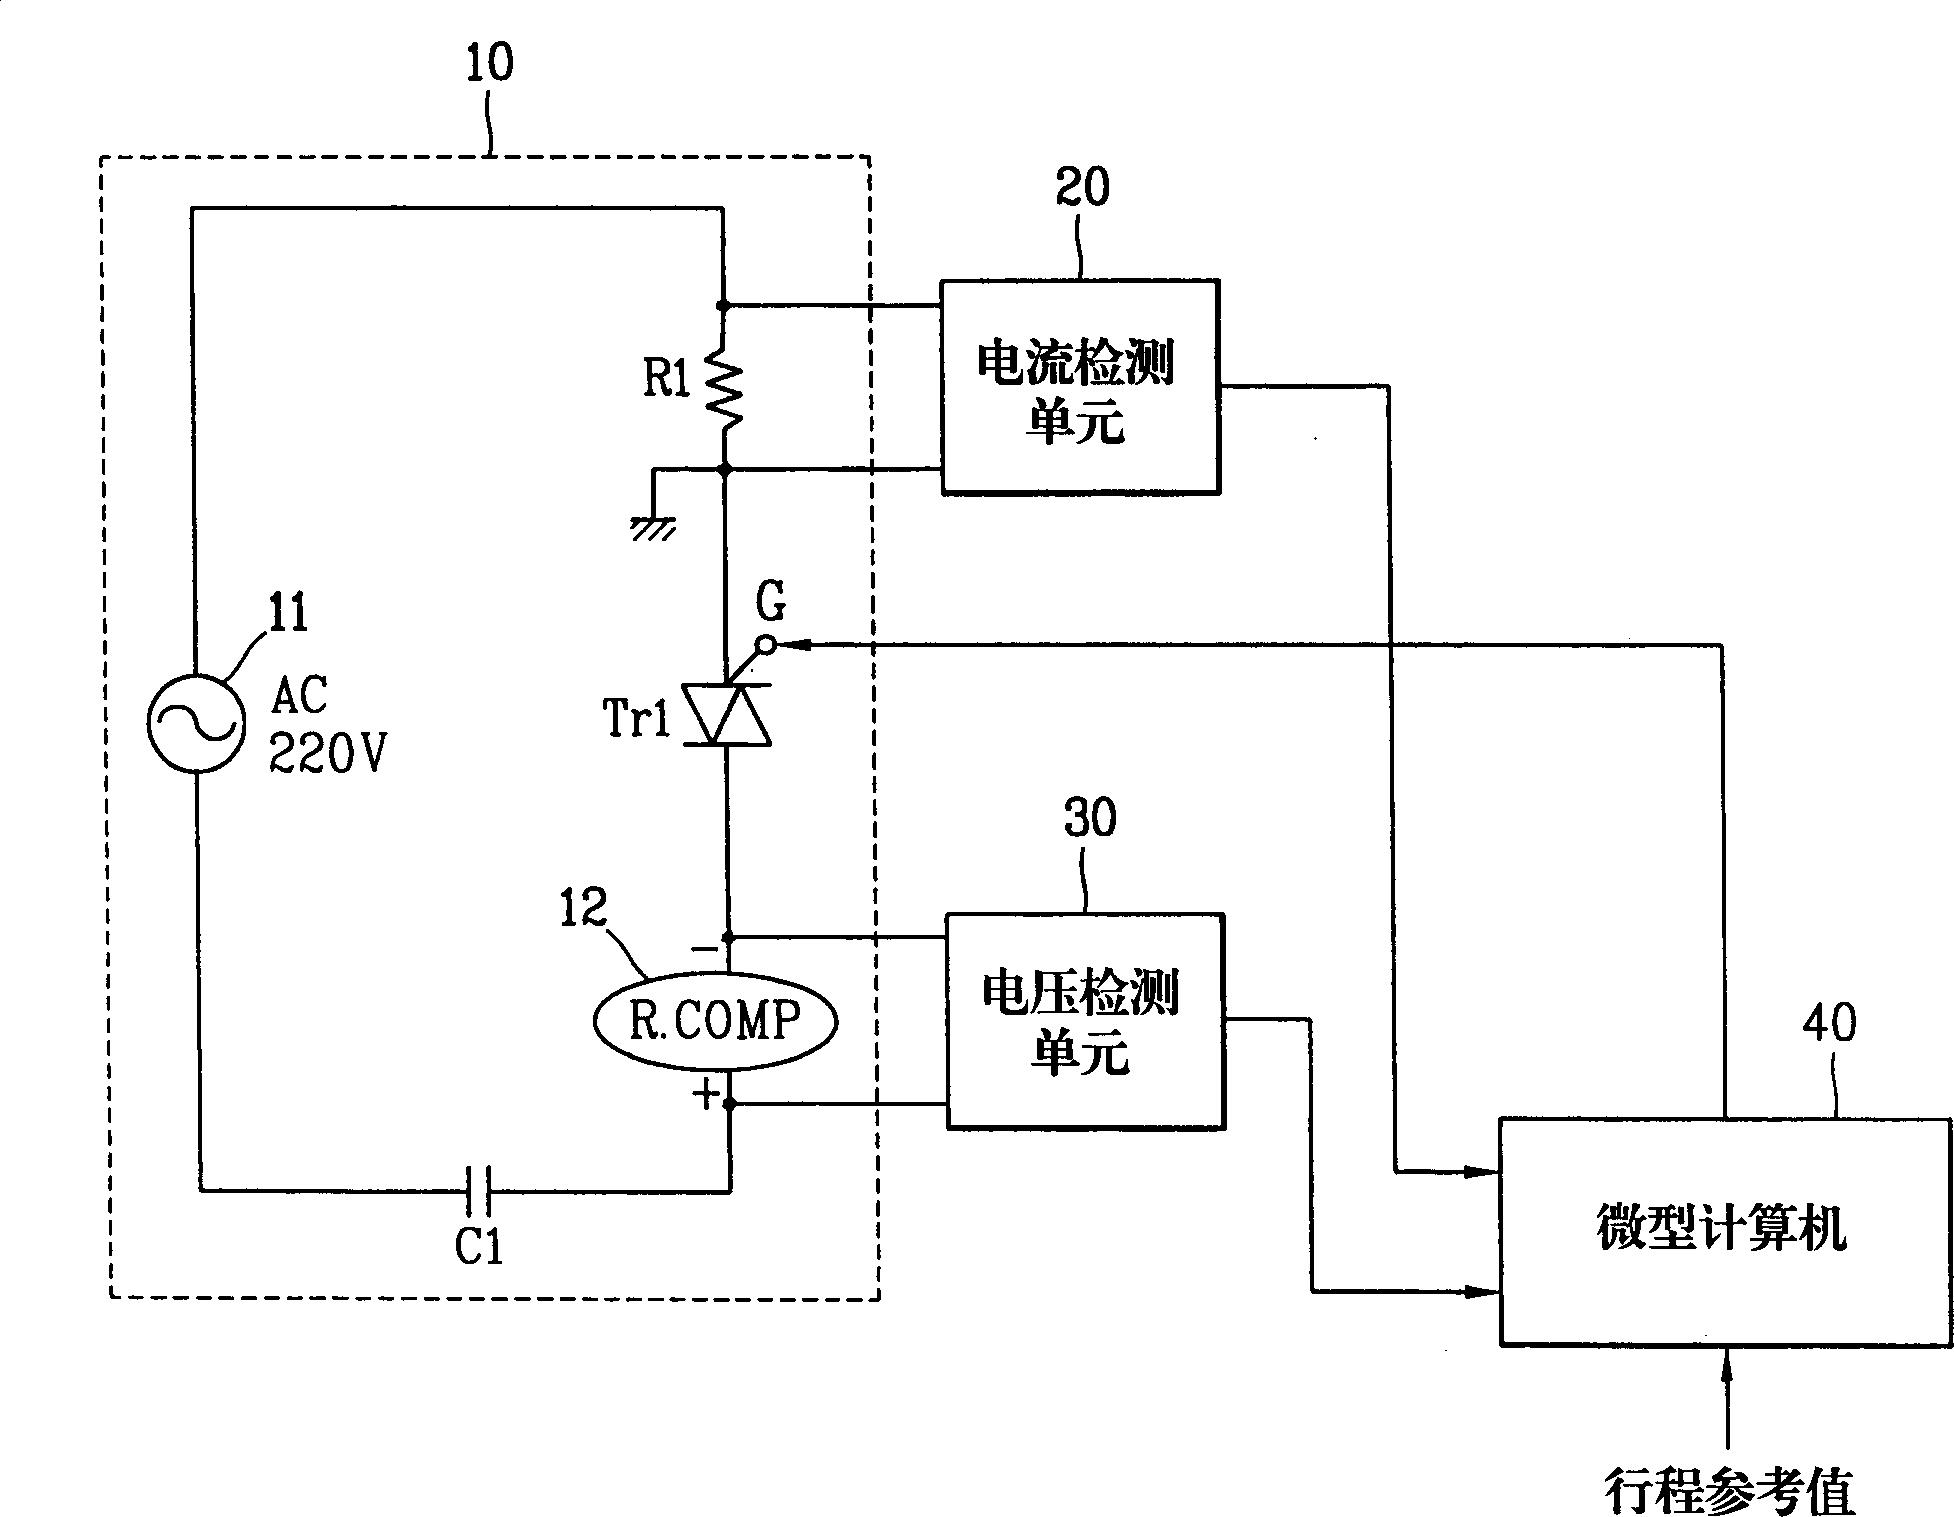 Operatio control method of reciprocating compressor